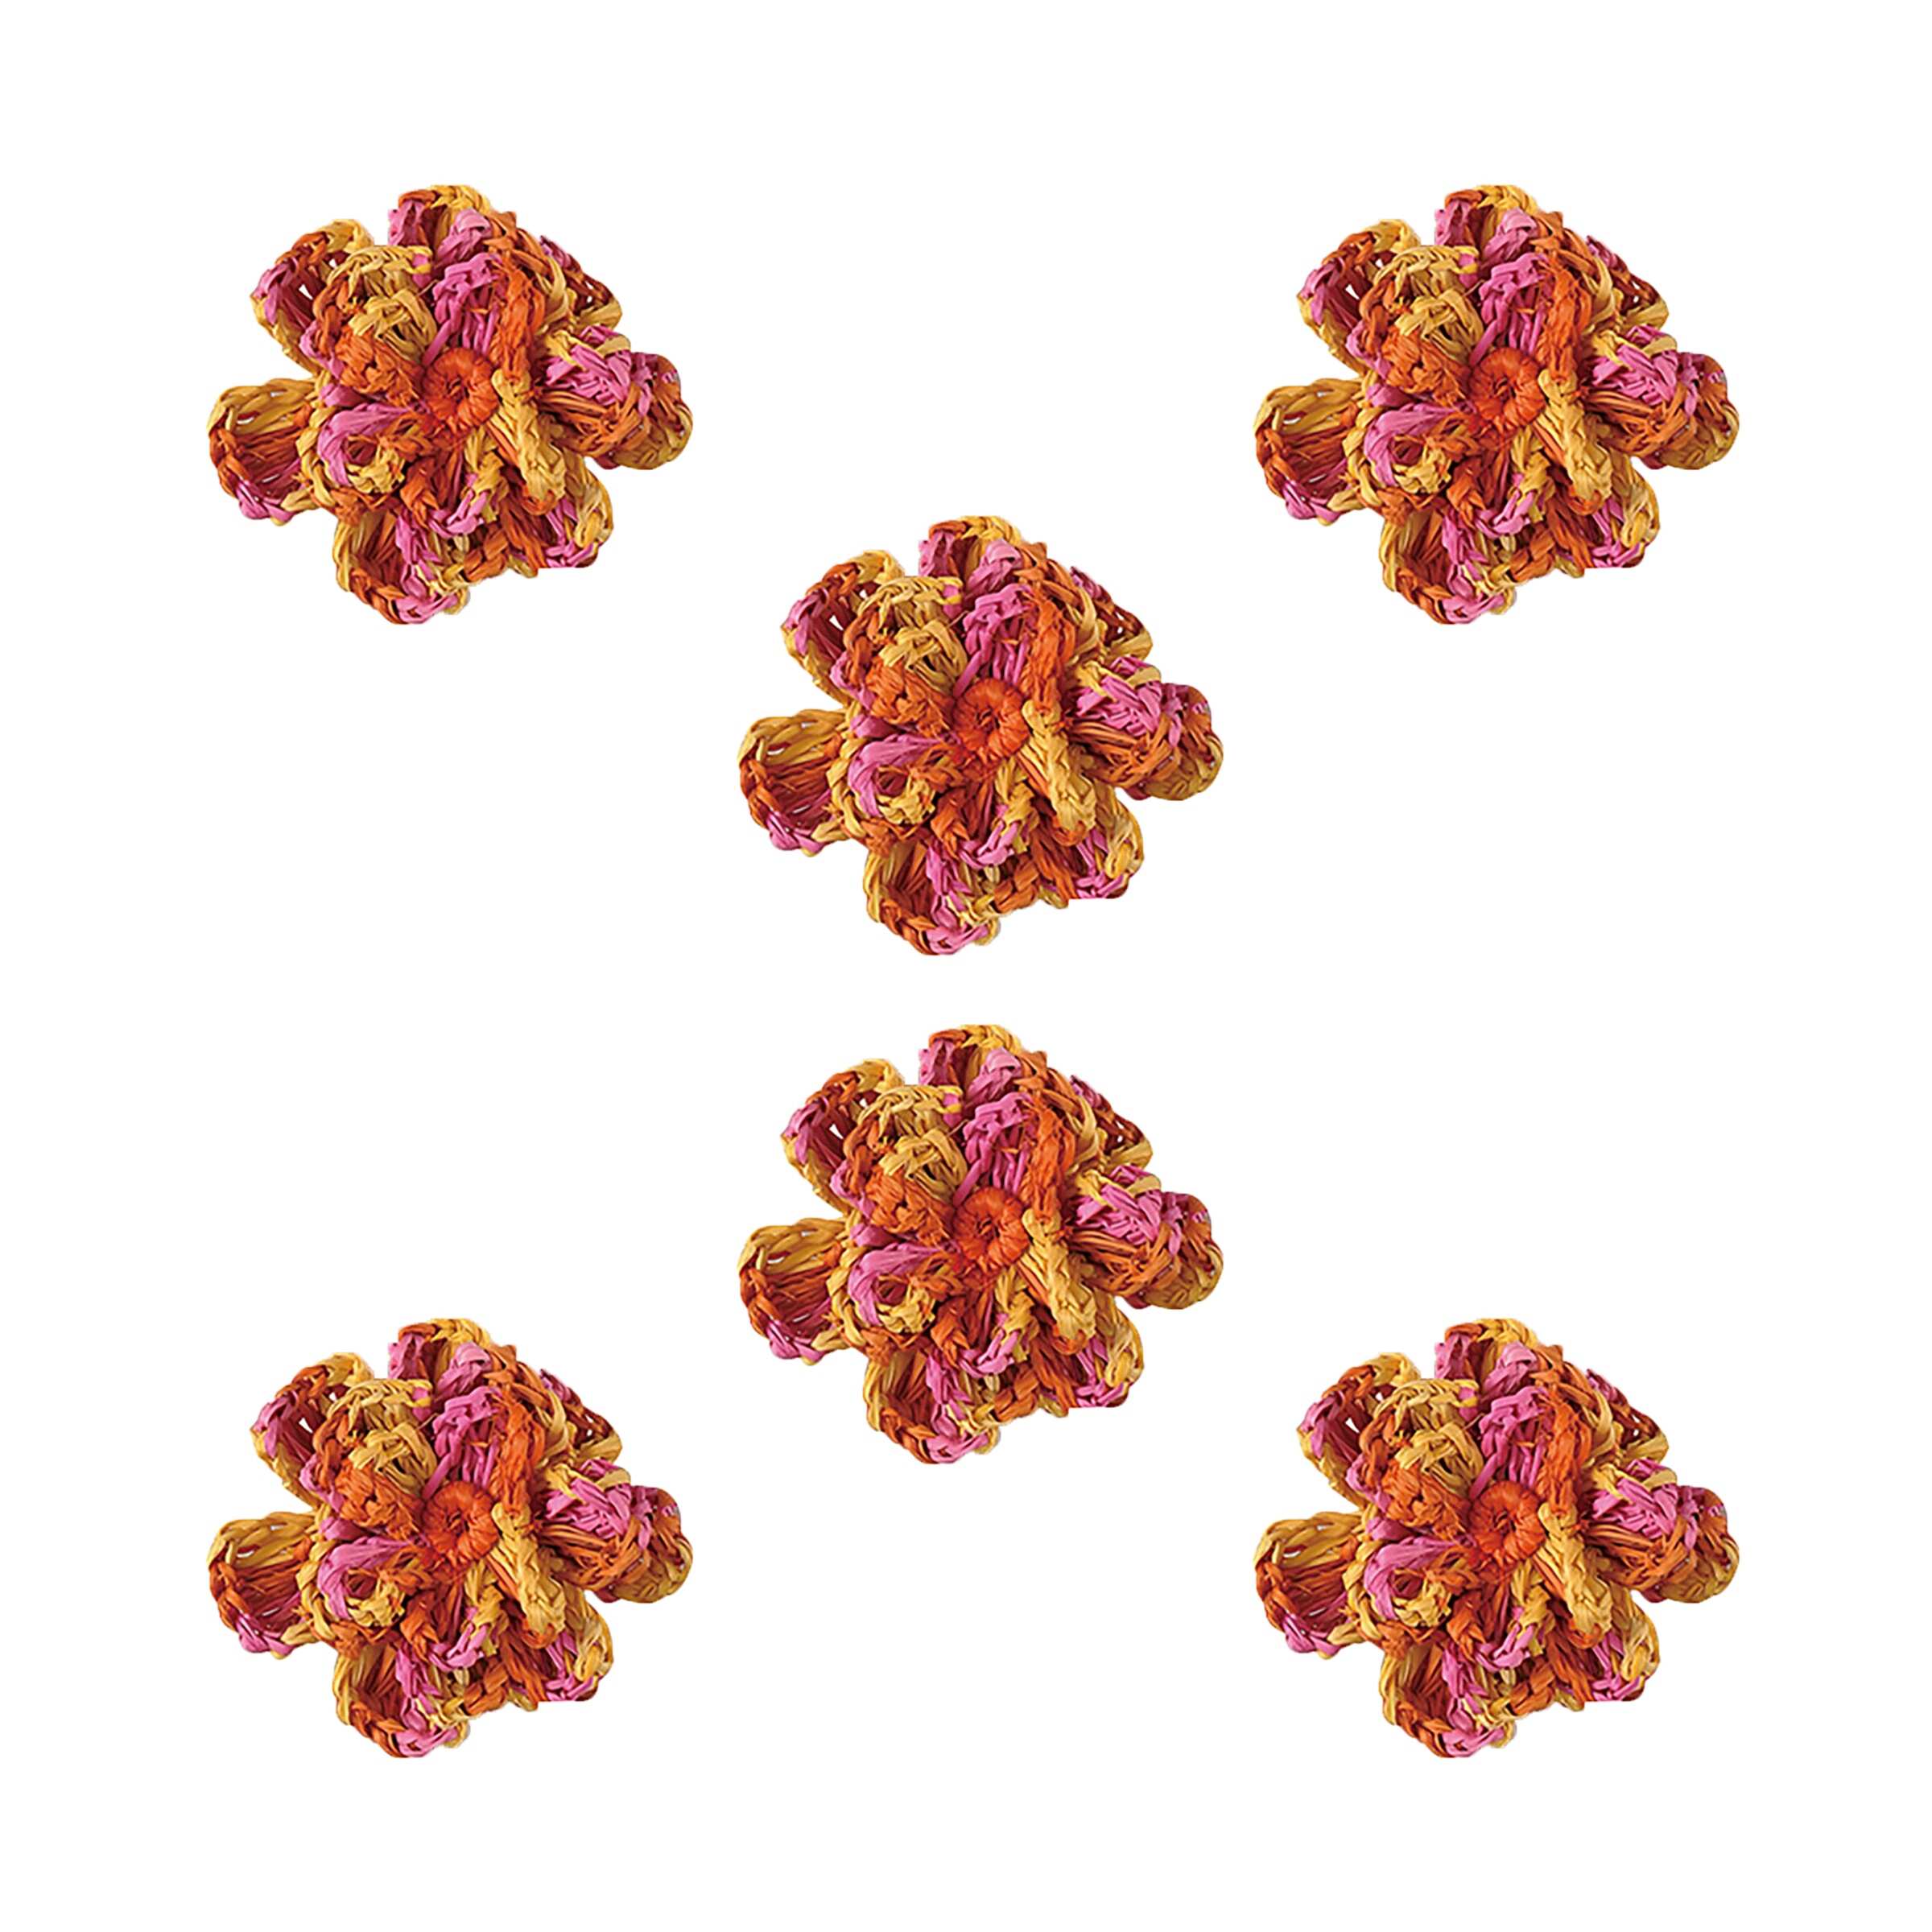 Coral/Orange Crochet Flower Spring Easter Summer Fiesta Hand Crafted Napkin Ring Set of 6 - 1.5"